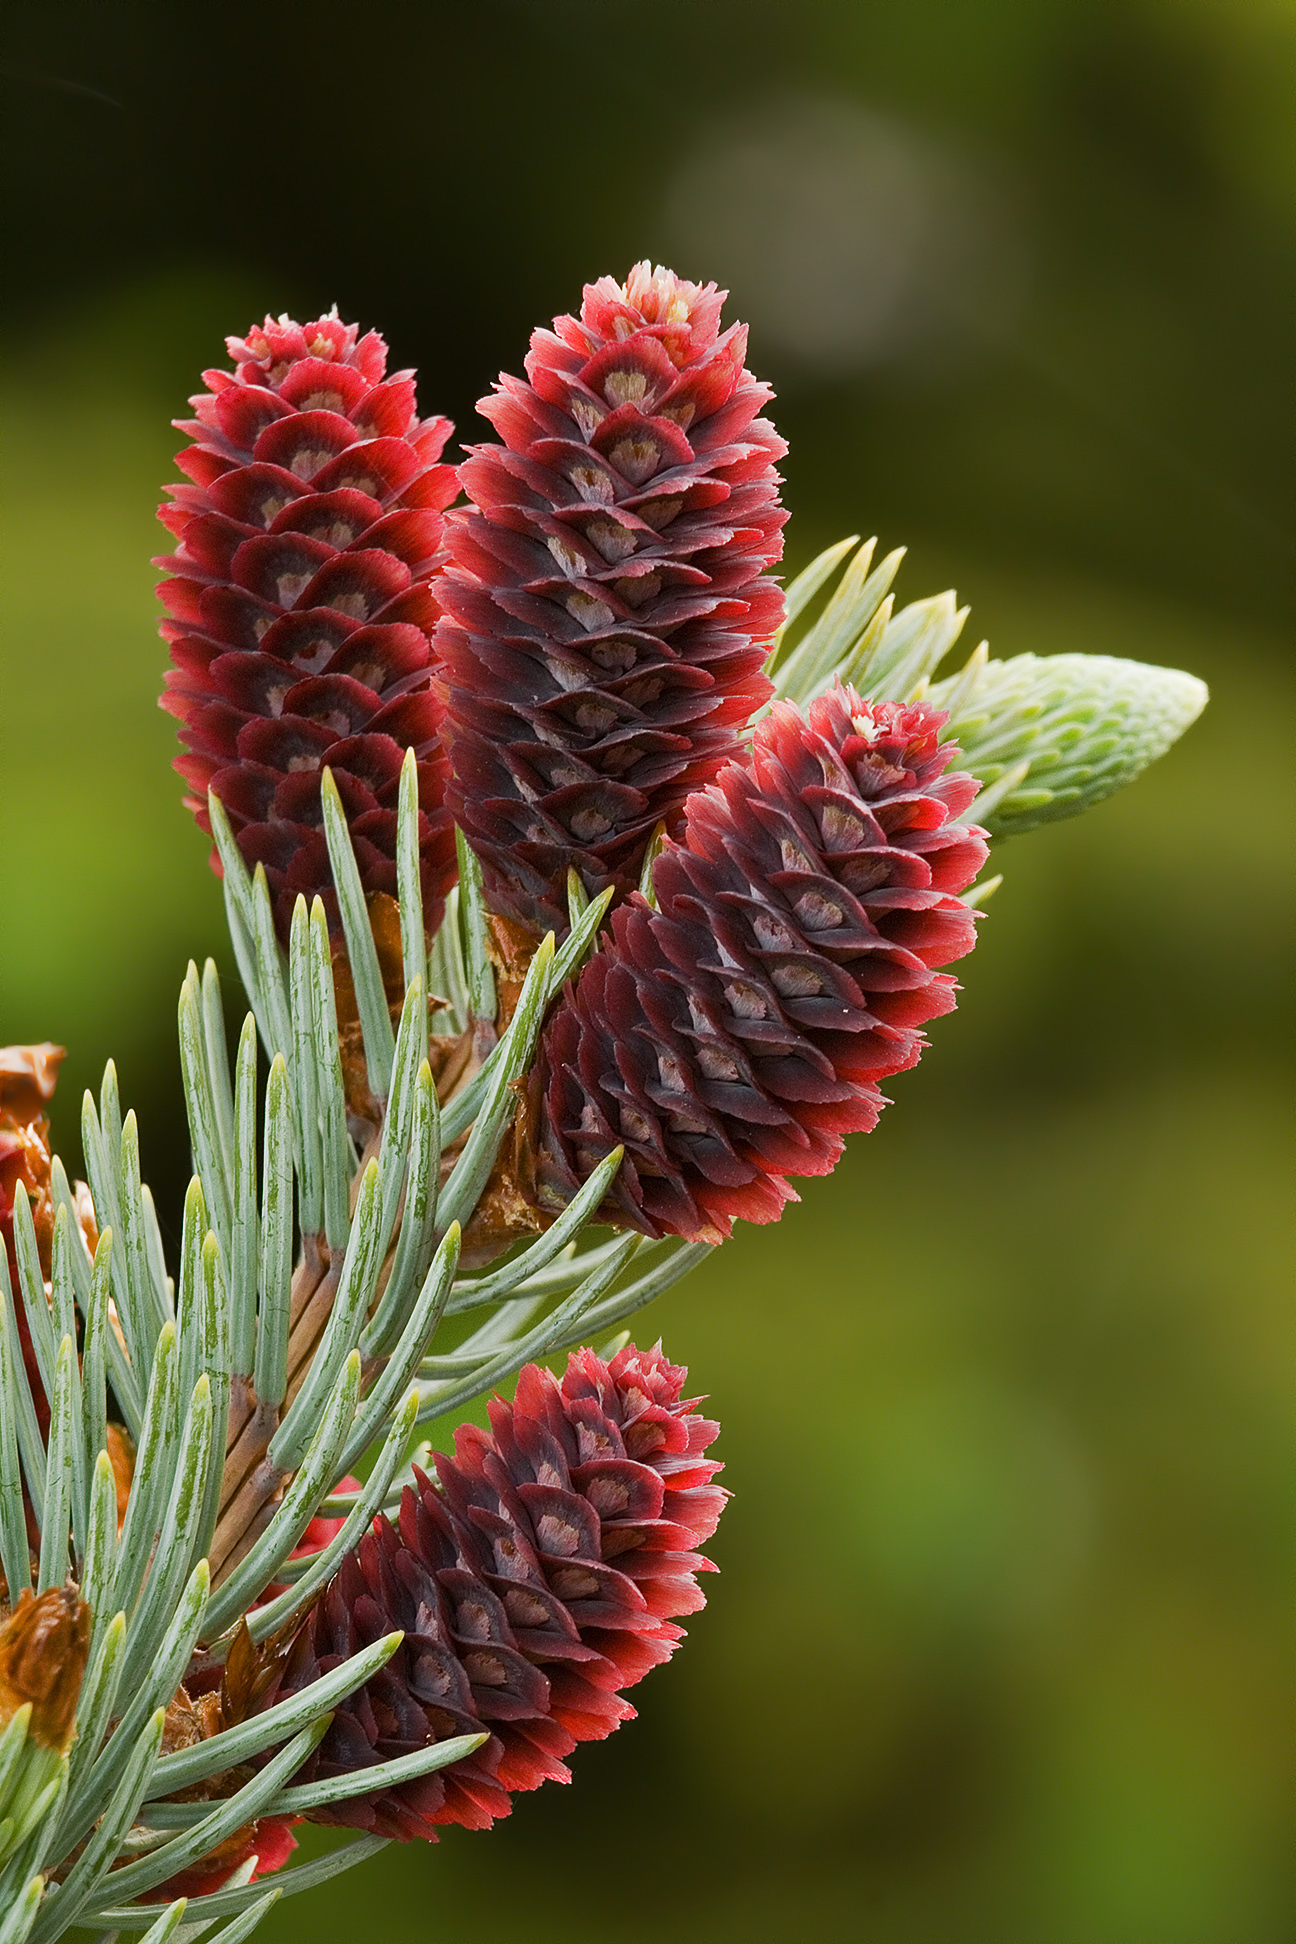 Pine cones photo